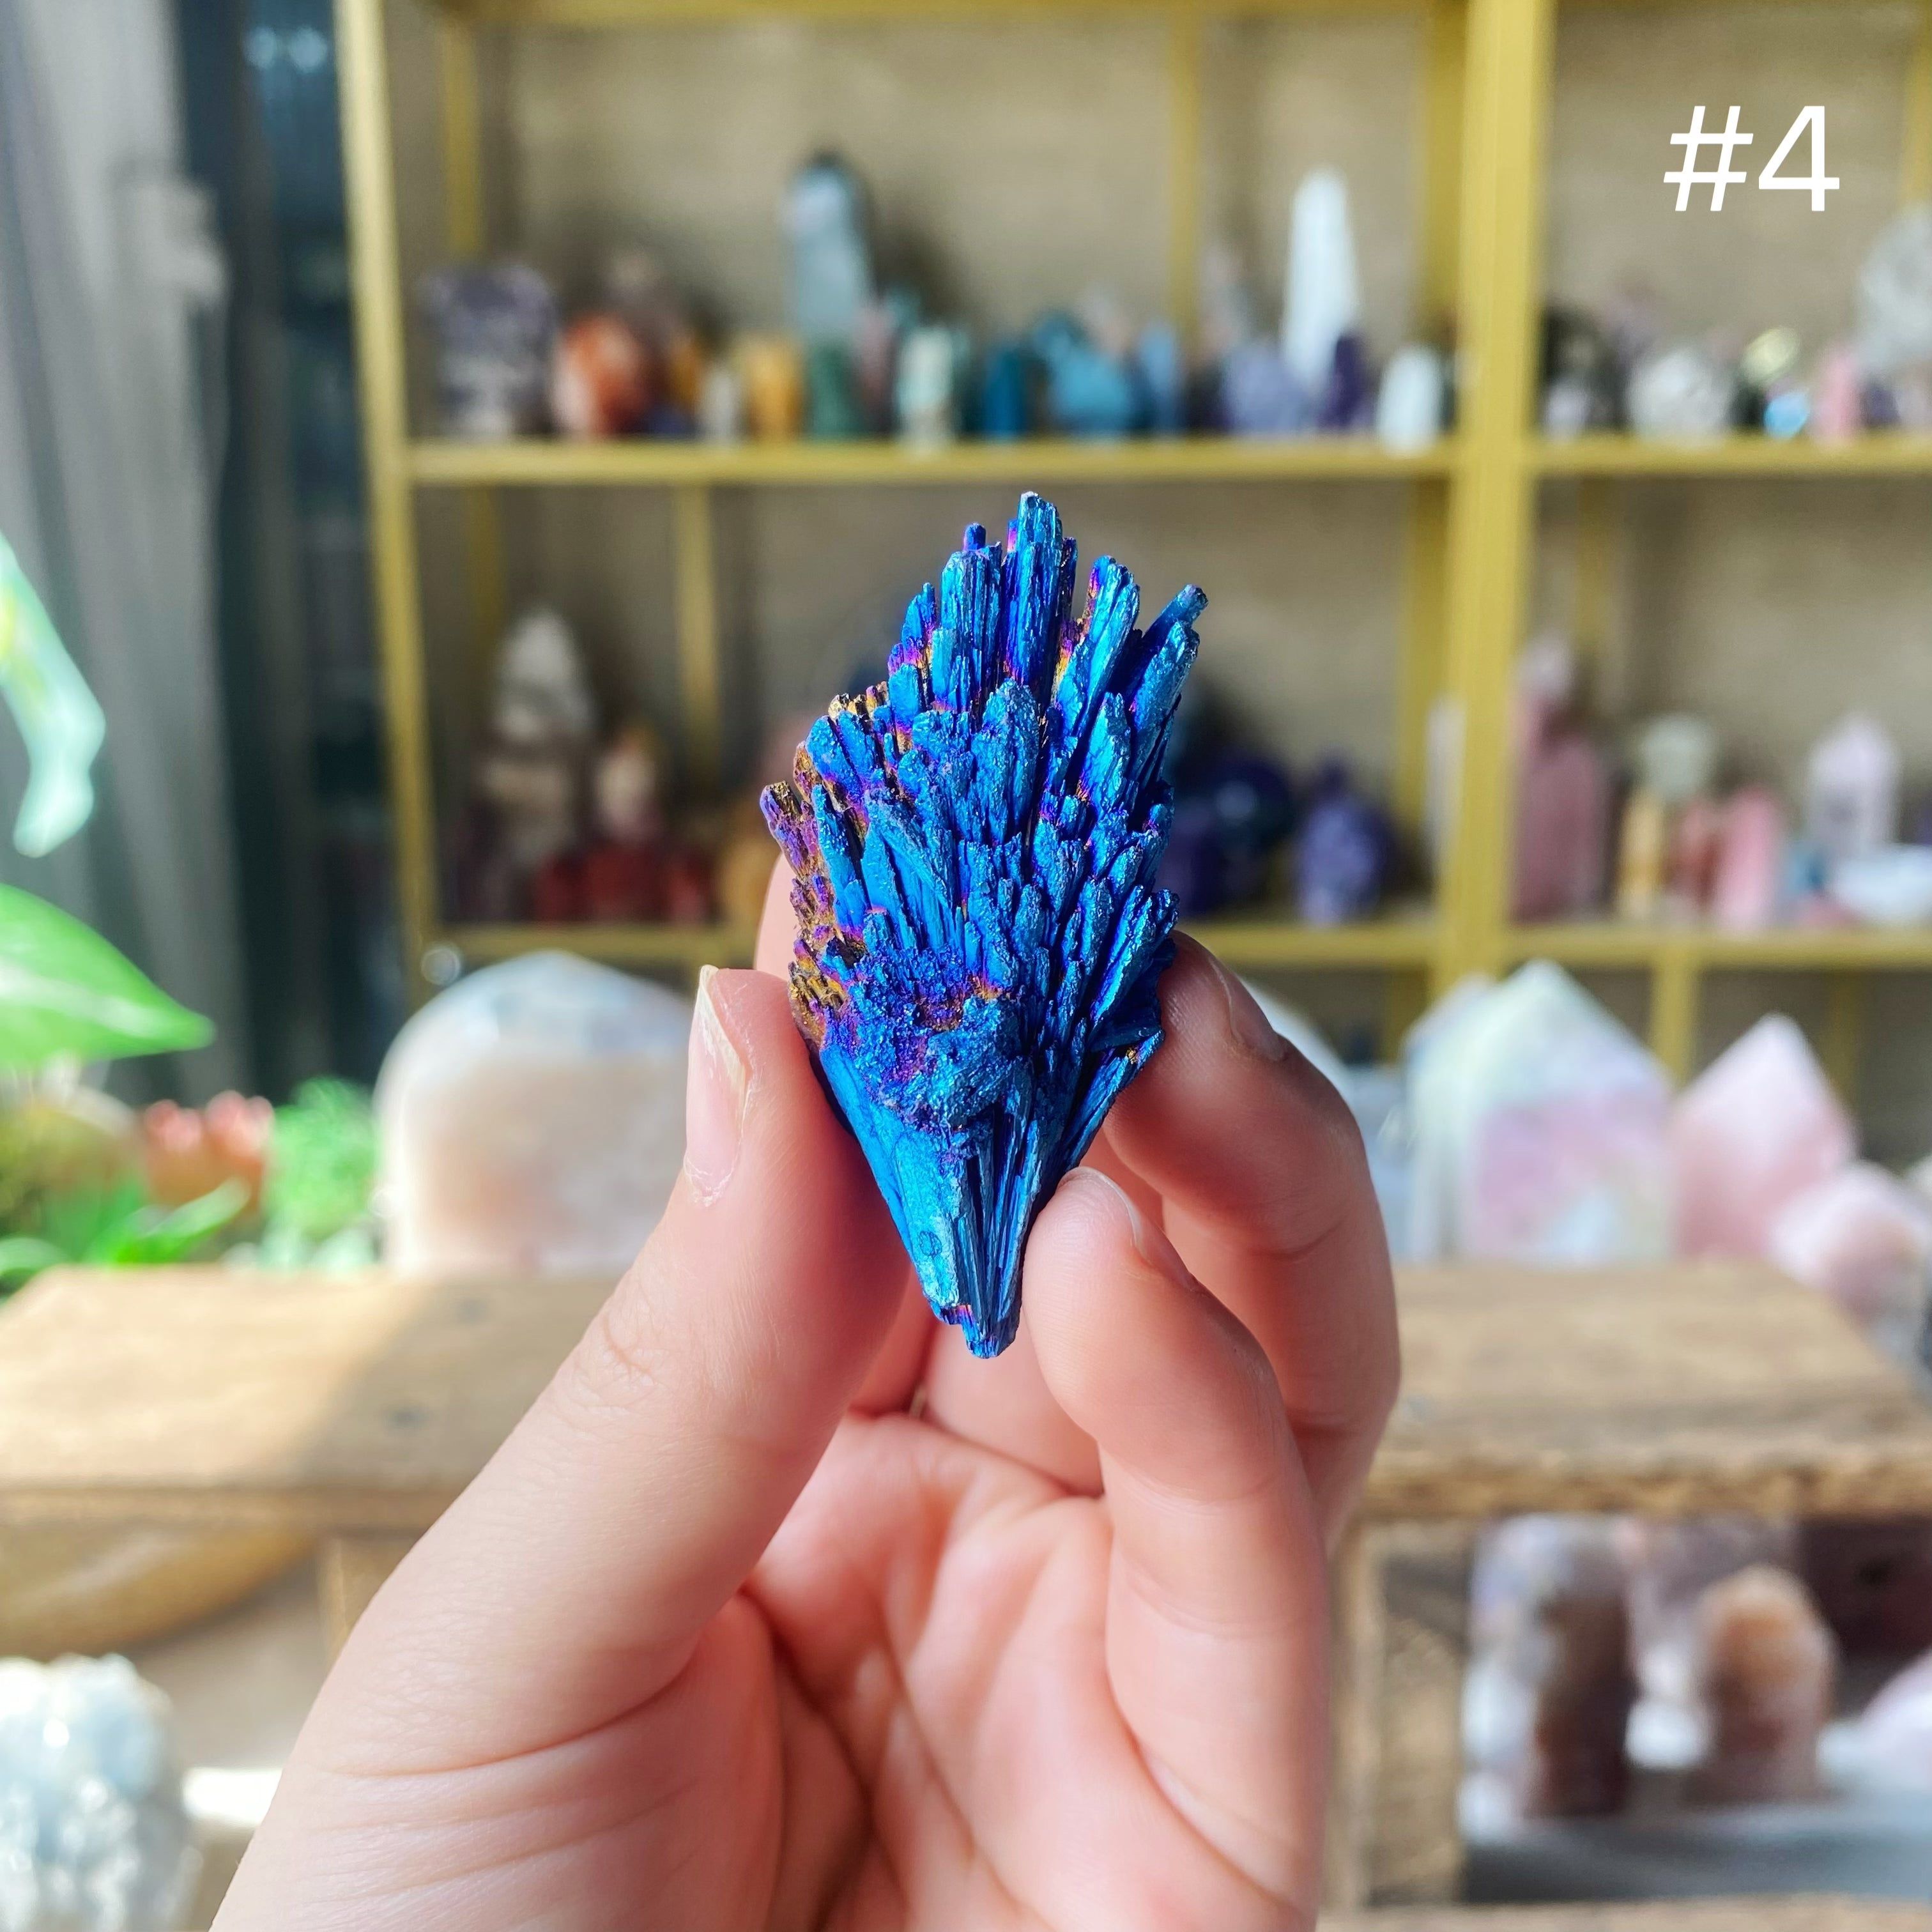 【Weekly Flash Deals】Aura Black Tourmaline Peacock Blue Feathers